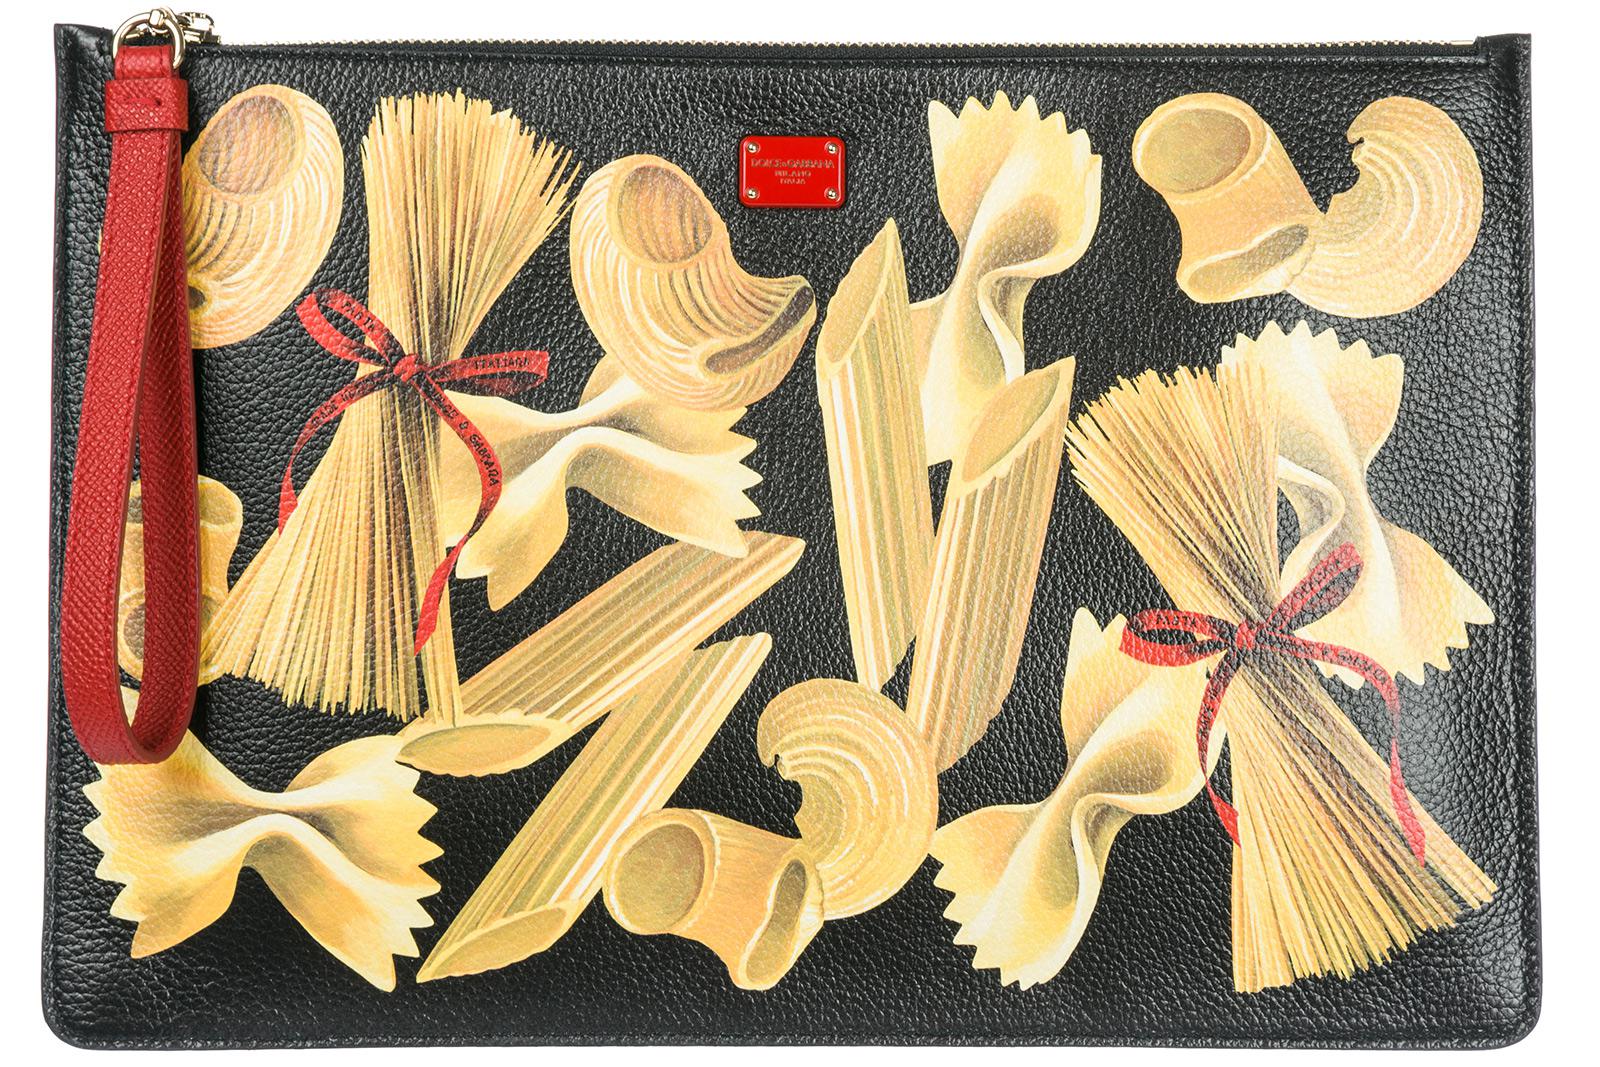 Dolce & Gabbana Leather Pasta Print Clutch in Nero (Black) - Lyst